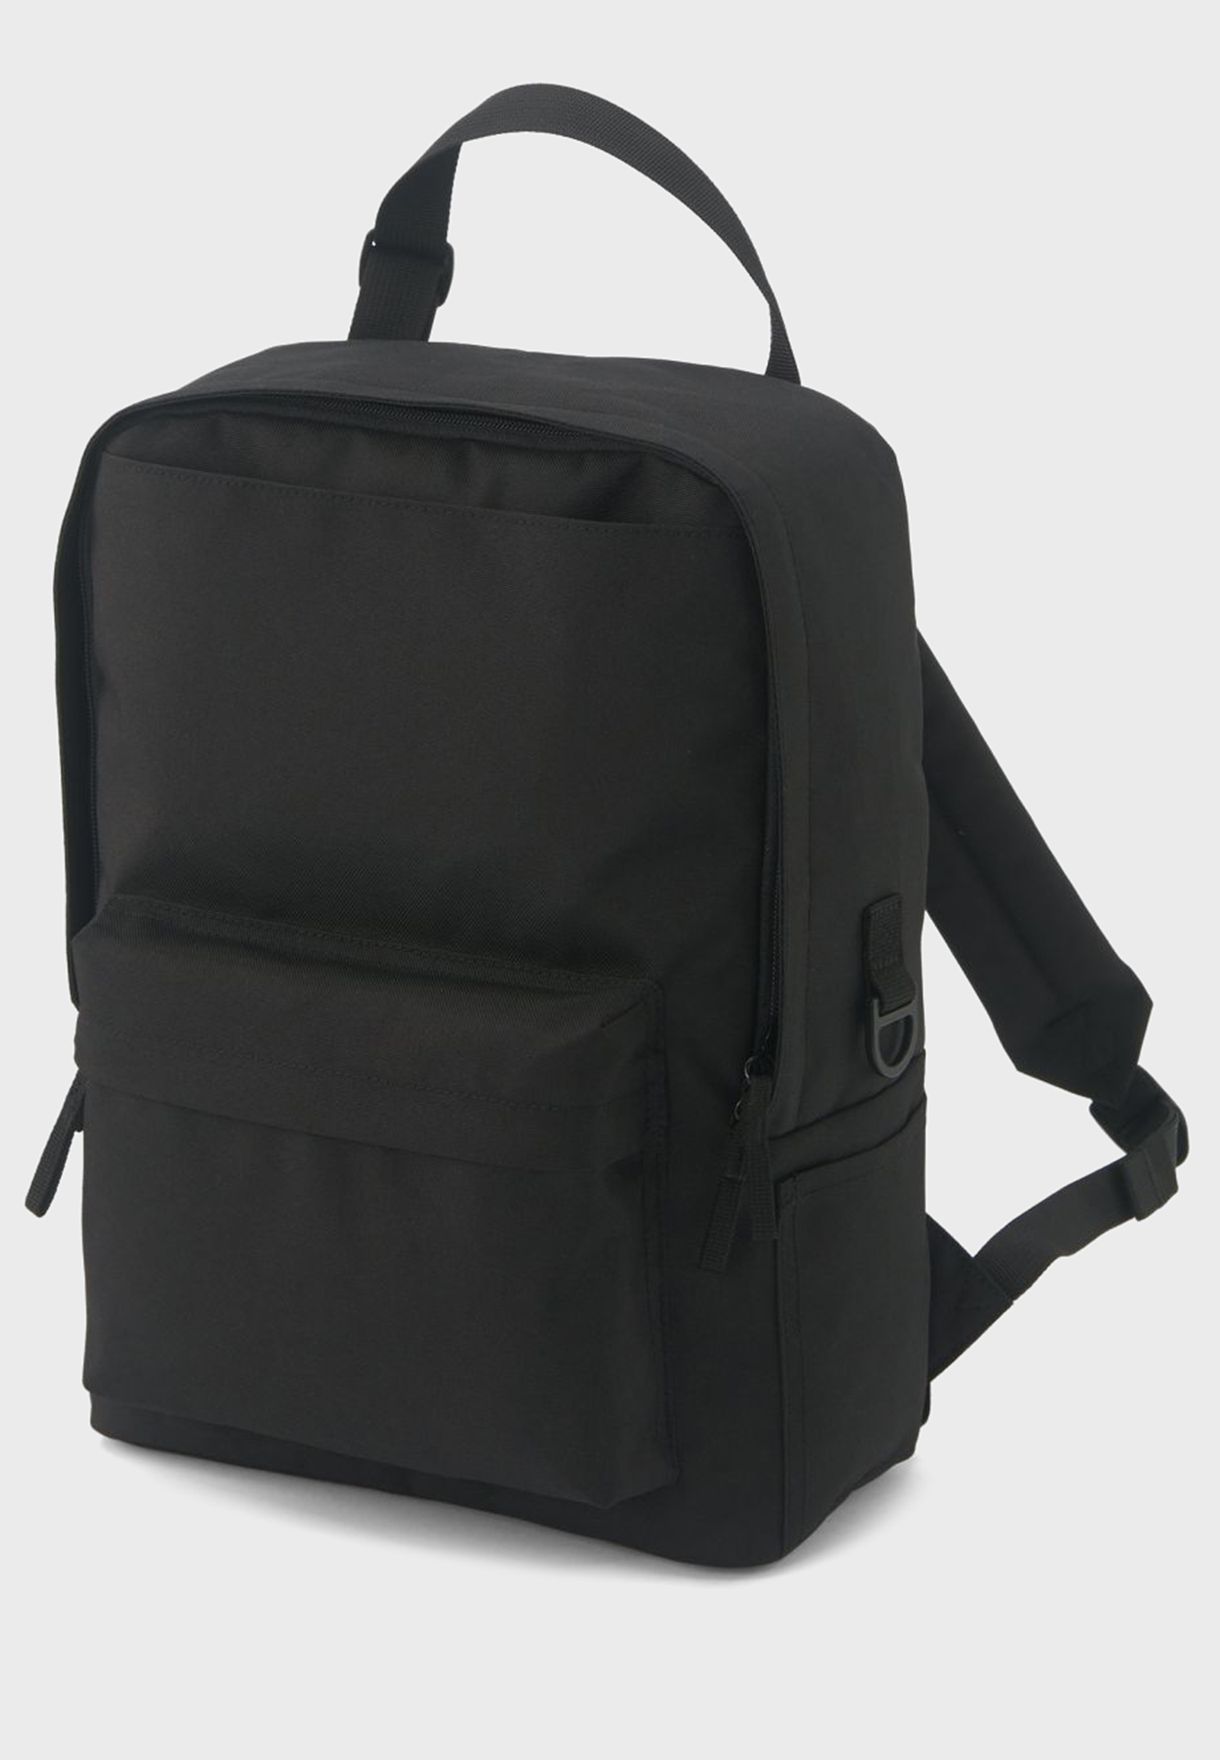 Rucksack With Adjustable Handle Backpack